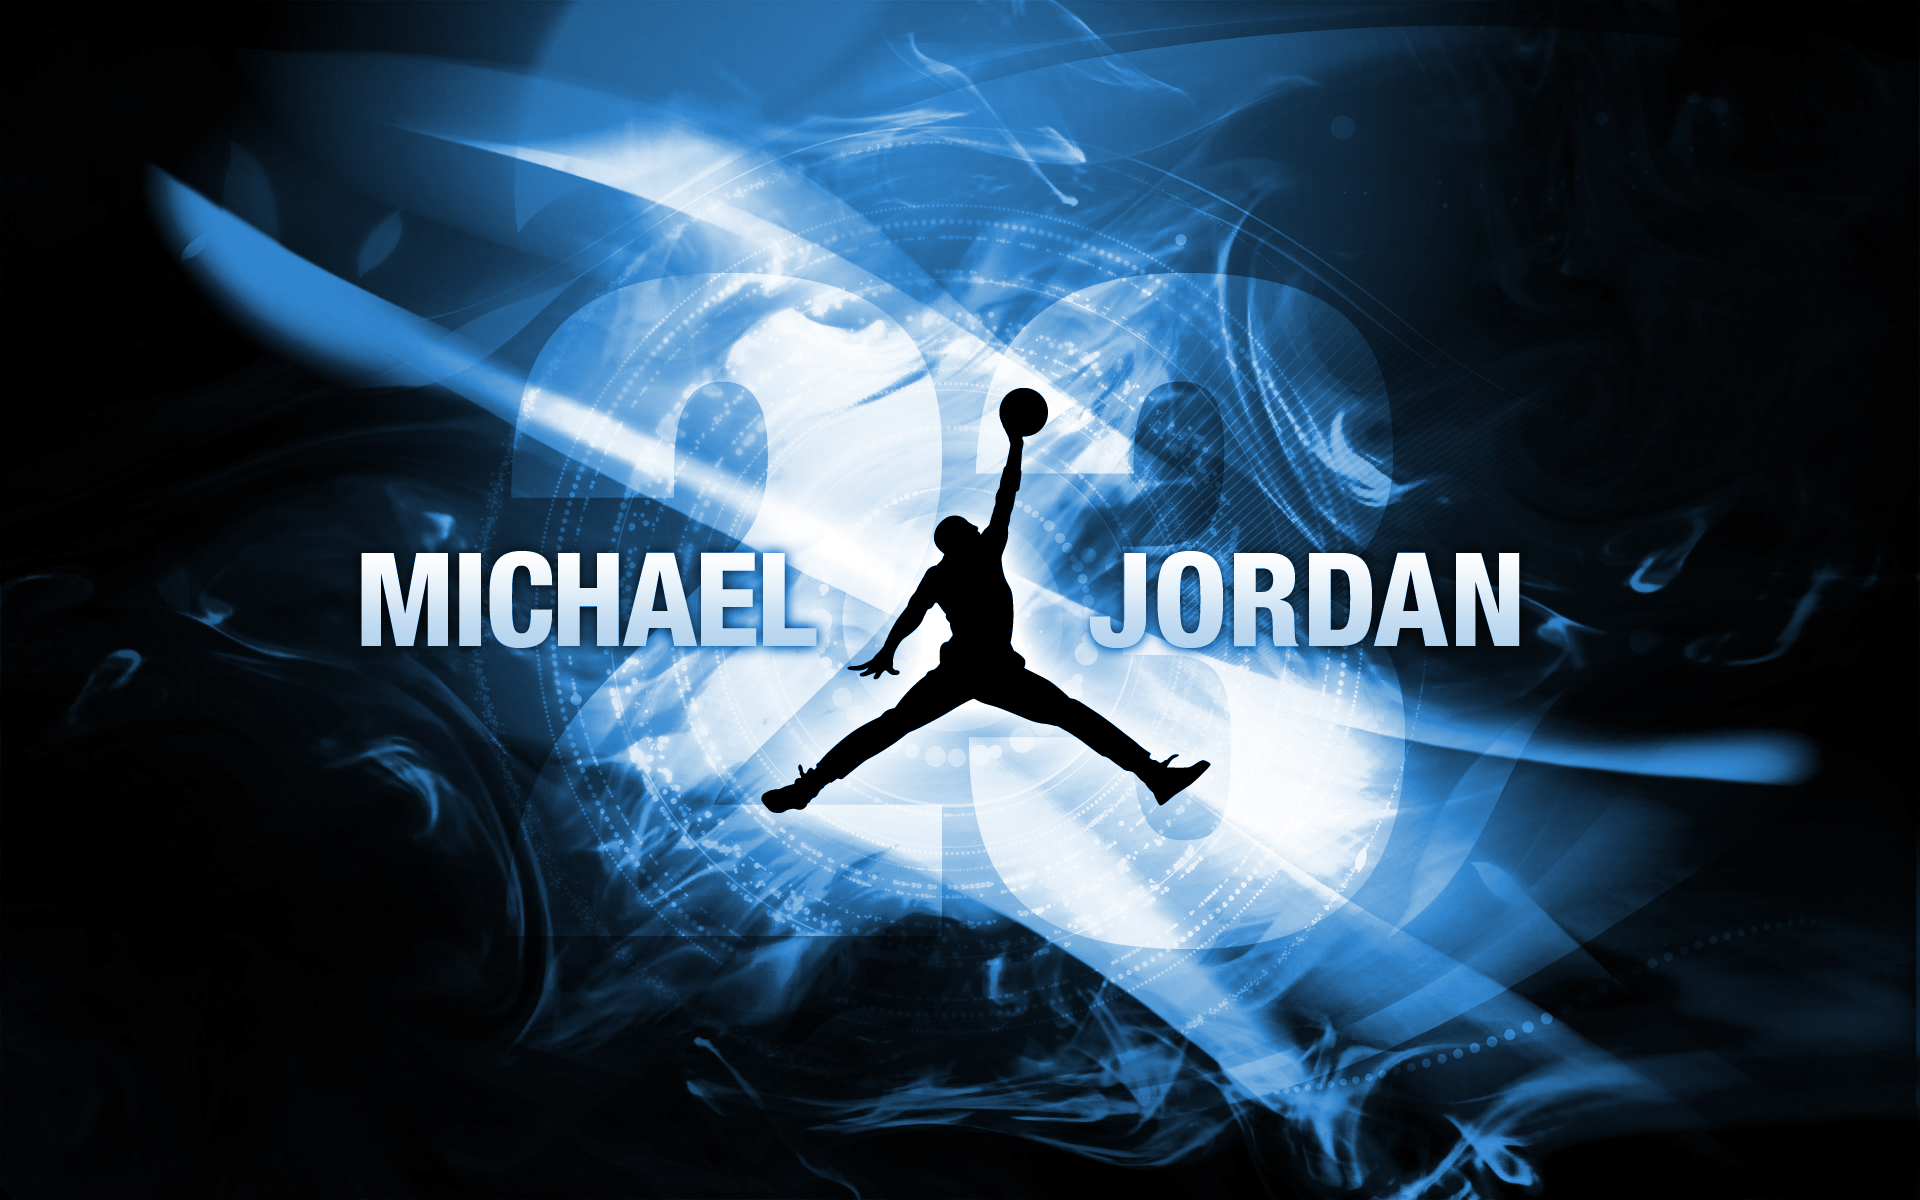 7680x43 Michael Jordan Basketball Logo 8k Wallpaper Hd Sports 4k Wallpapers Images Photos And Background Wallpapers Den